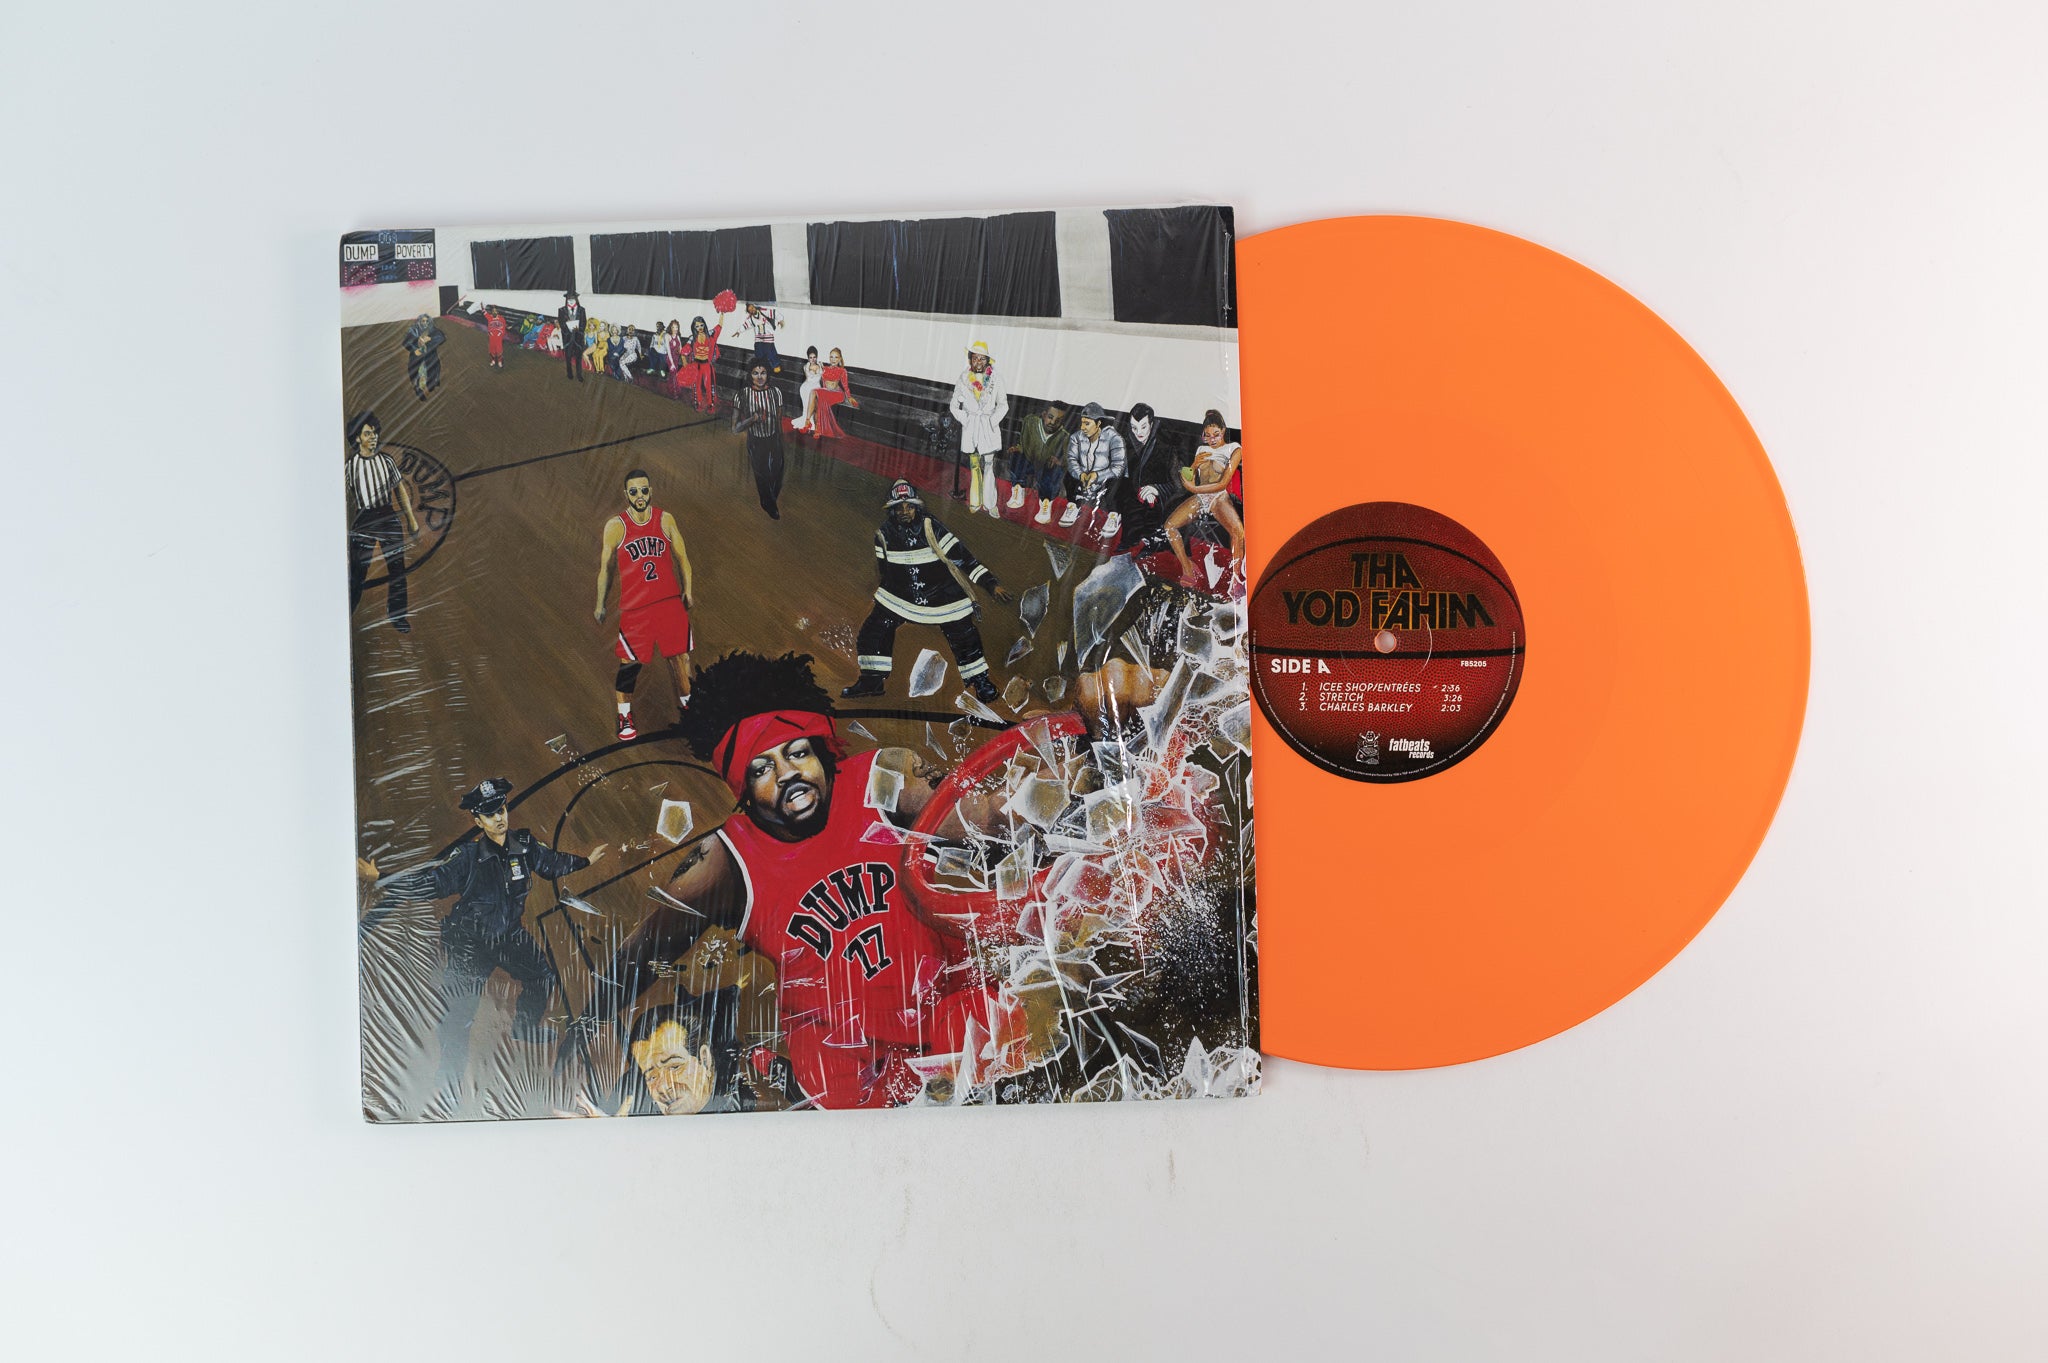 Your Old Droog - Tha YOD Fahim on Fatbeats Limited Orange Vinyl